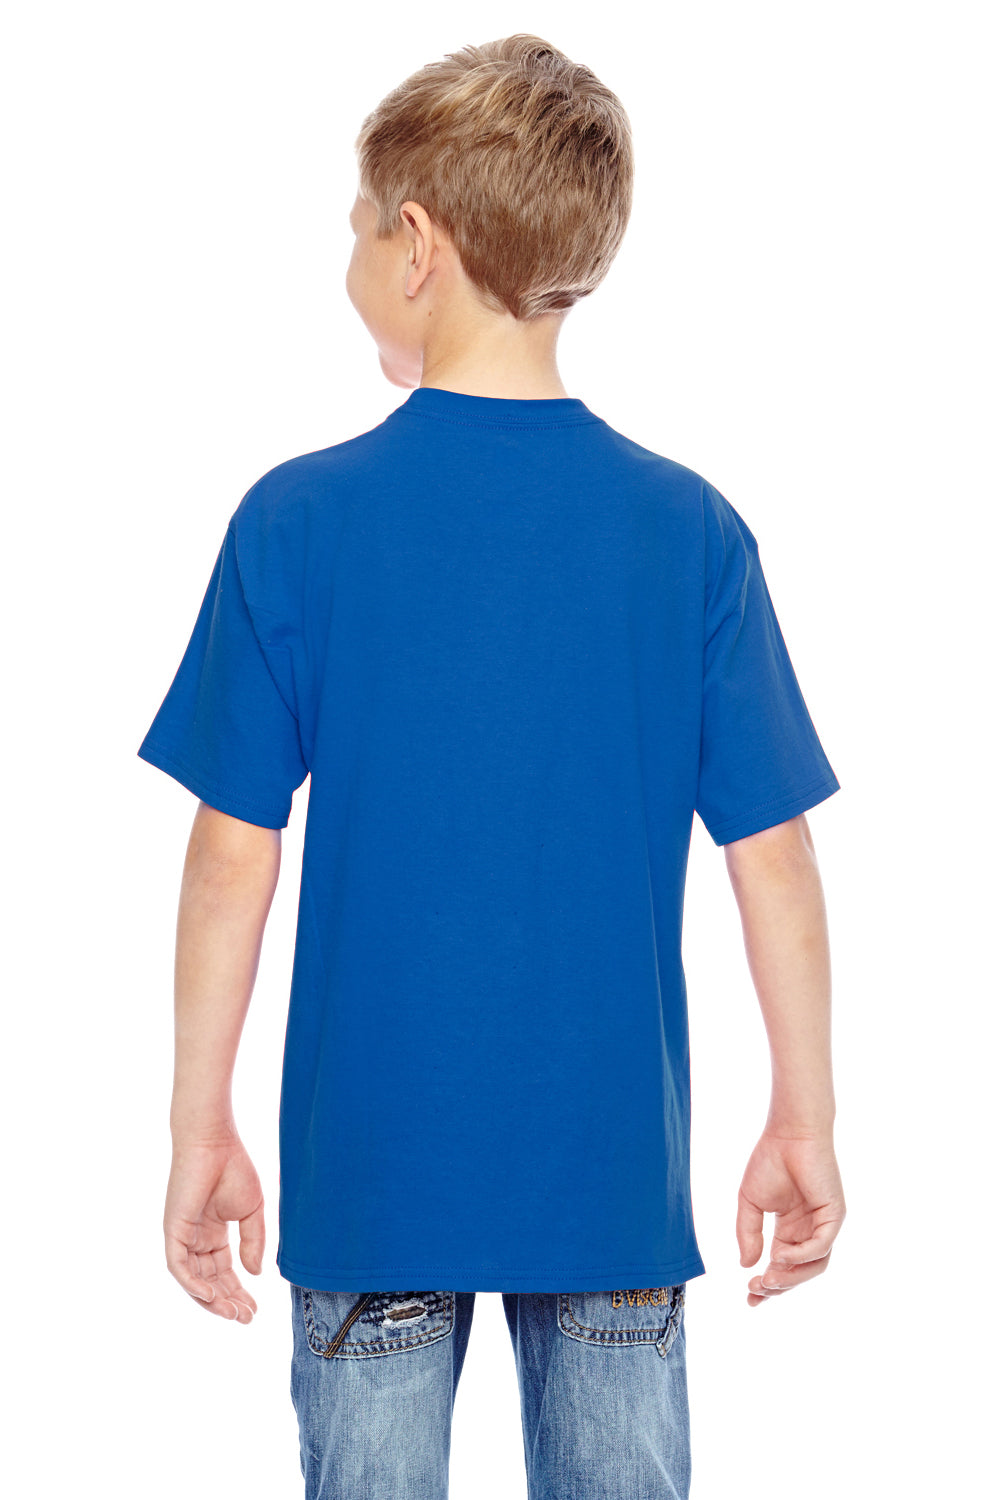 Hanes 498Y Youth Nano-T Short Sleeve Crewneck T-Shirt Royal Blue Back